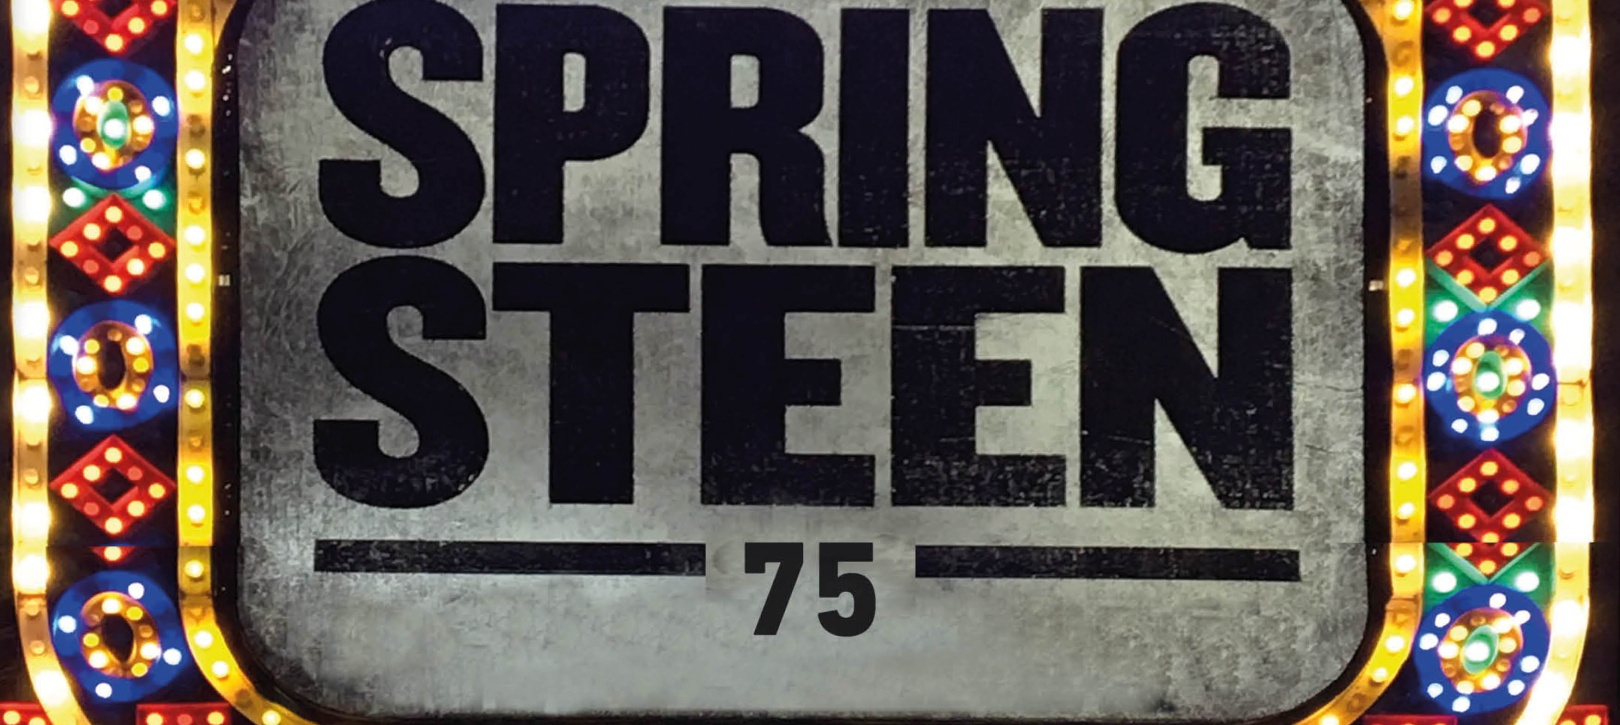 24-09-23 Springsteen 75.jpg